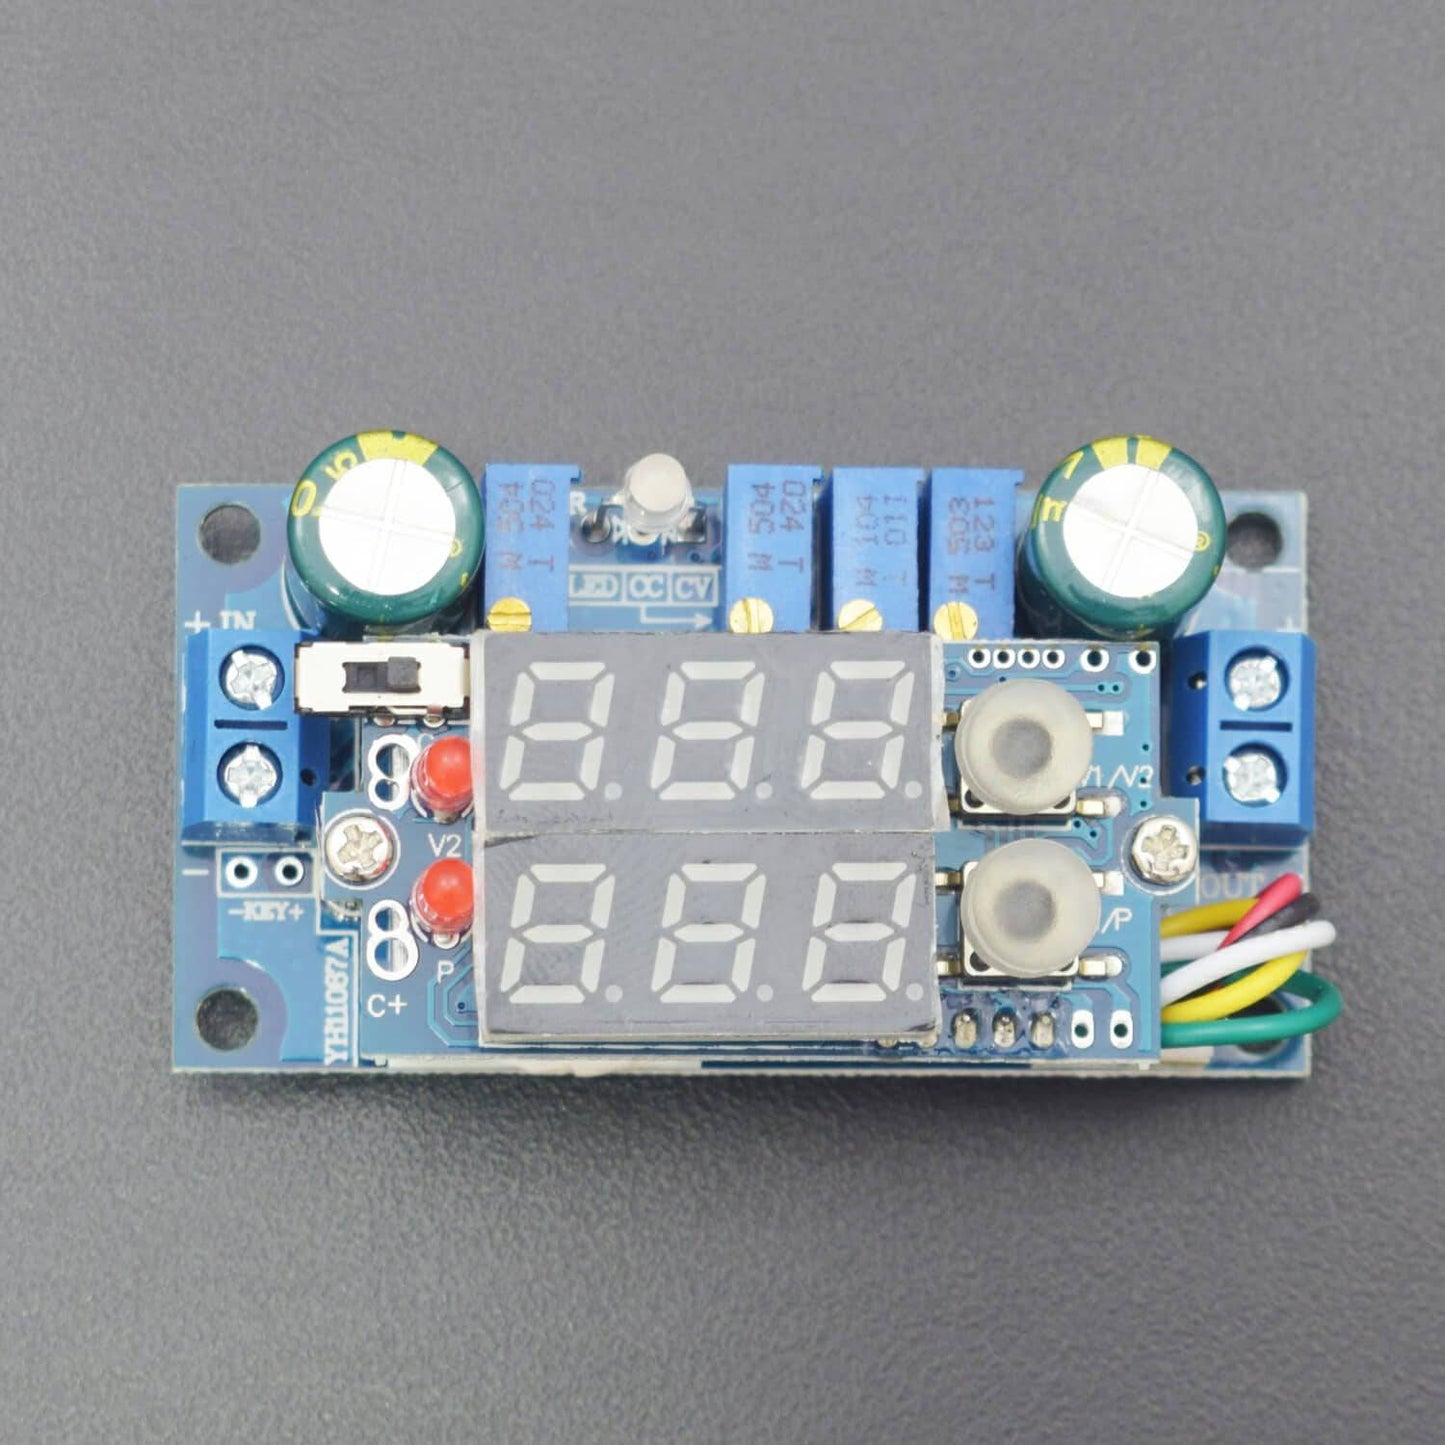 DC Voltage Regulator Buck Converter 6-36V to 1.25-32V 5A Constant Current Voltage MPPT Solar Controller with LED-RS1902 - REES52